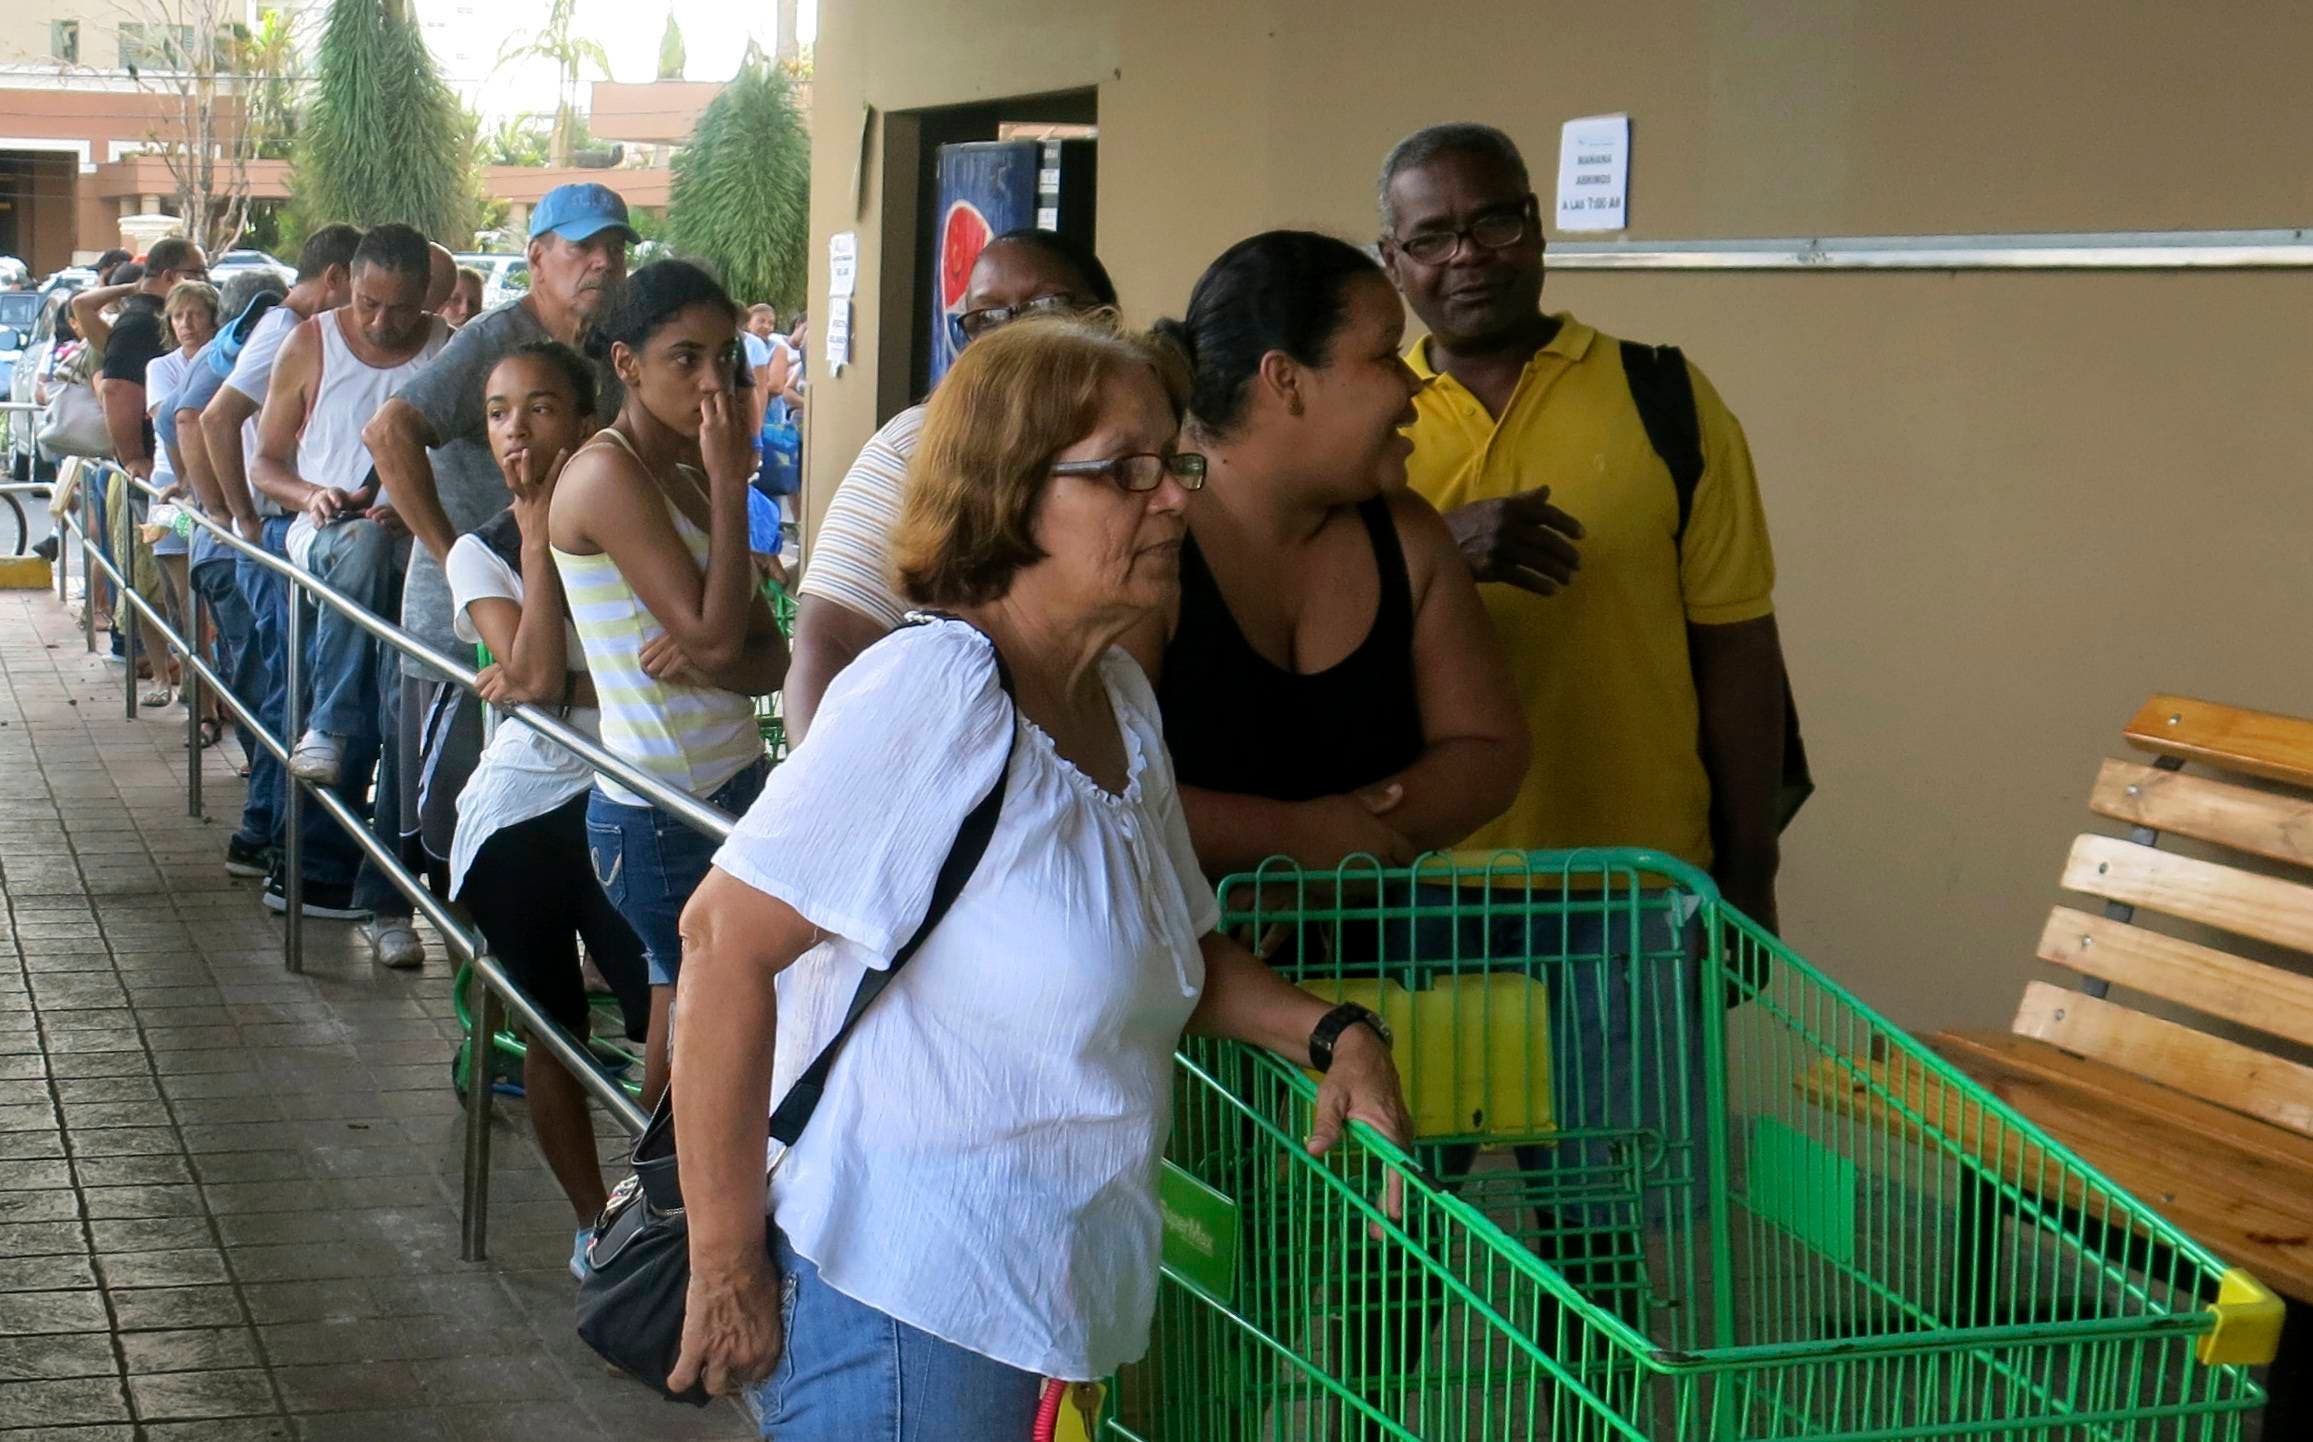 Supermercados en Puerto Rico abren por primera vez tras huracán María, pero prácticamente » no tienen de nada»